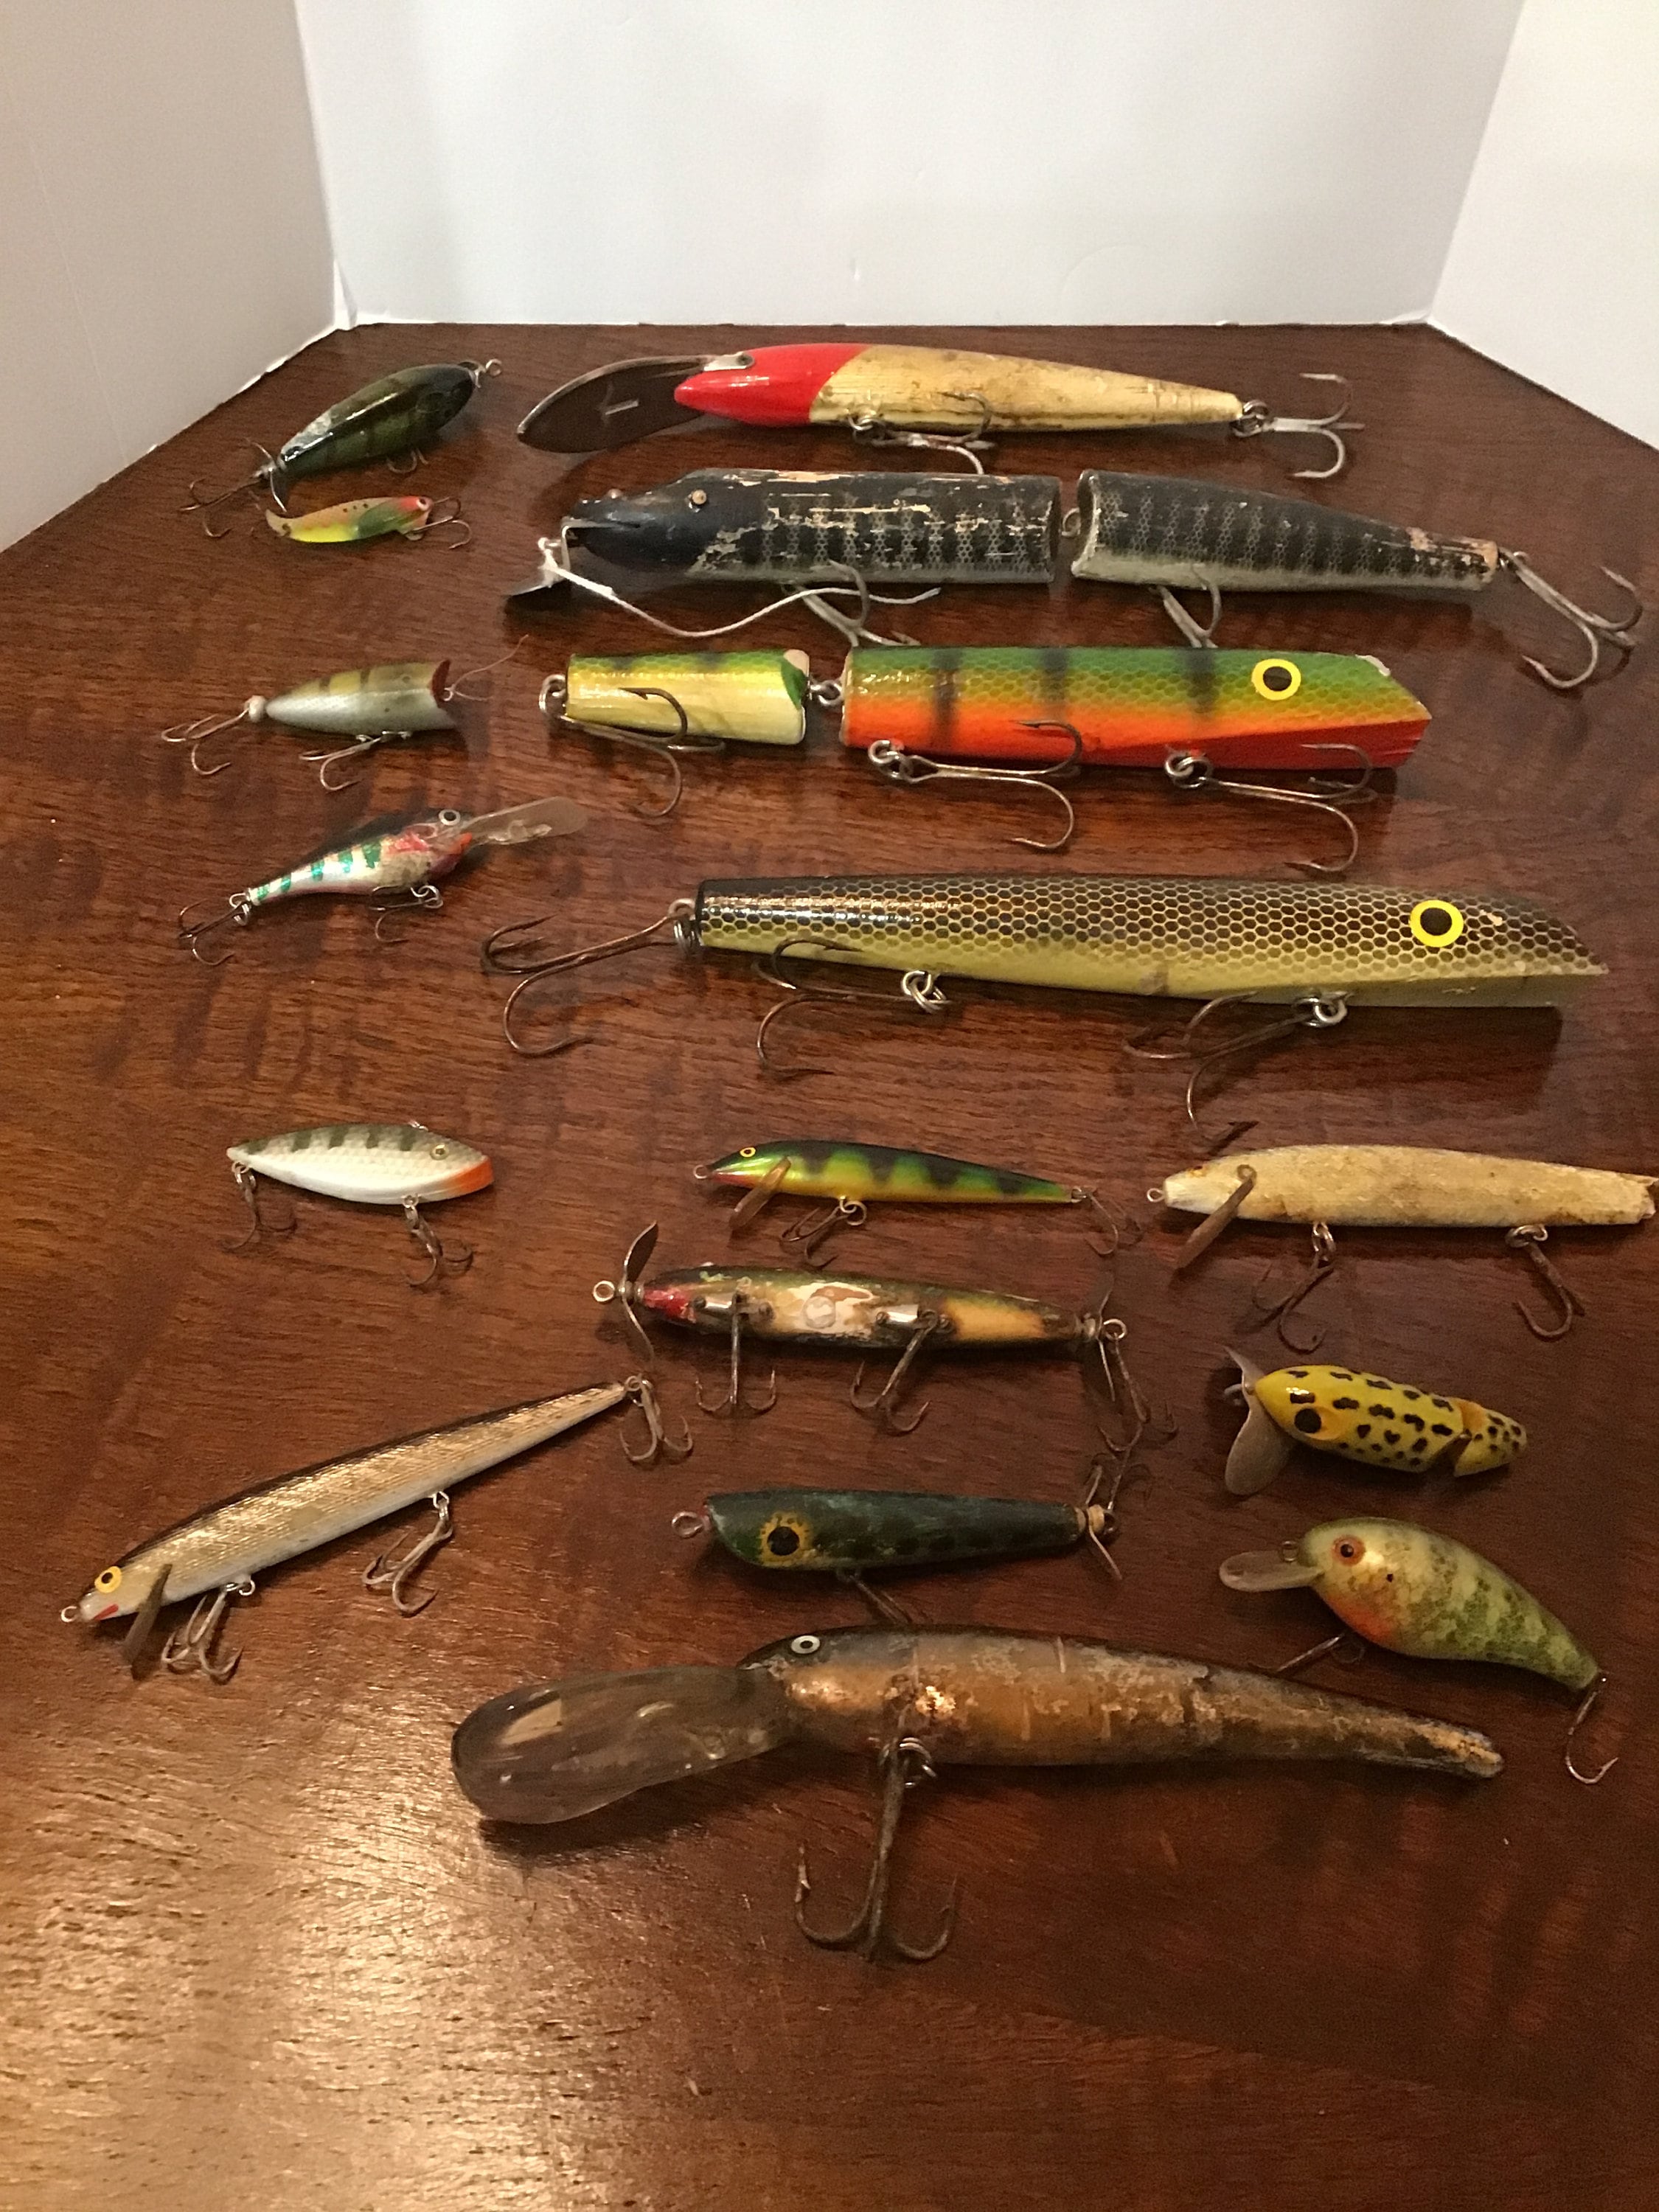 Vintage Fishing Lures Collection, River, Lake, Fishing Decor